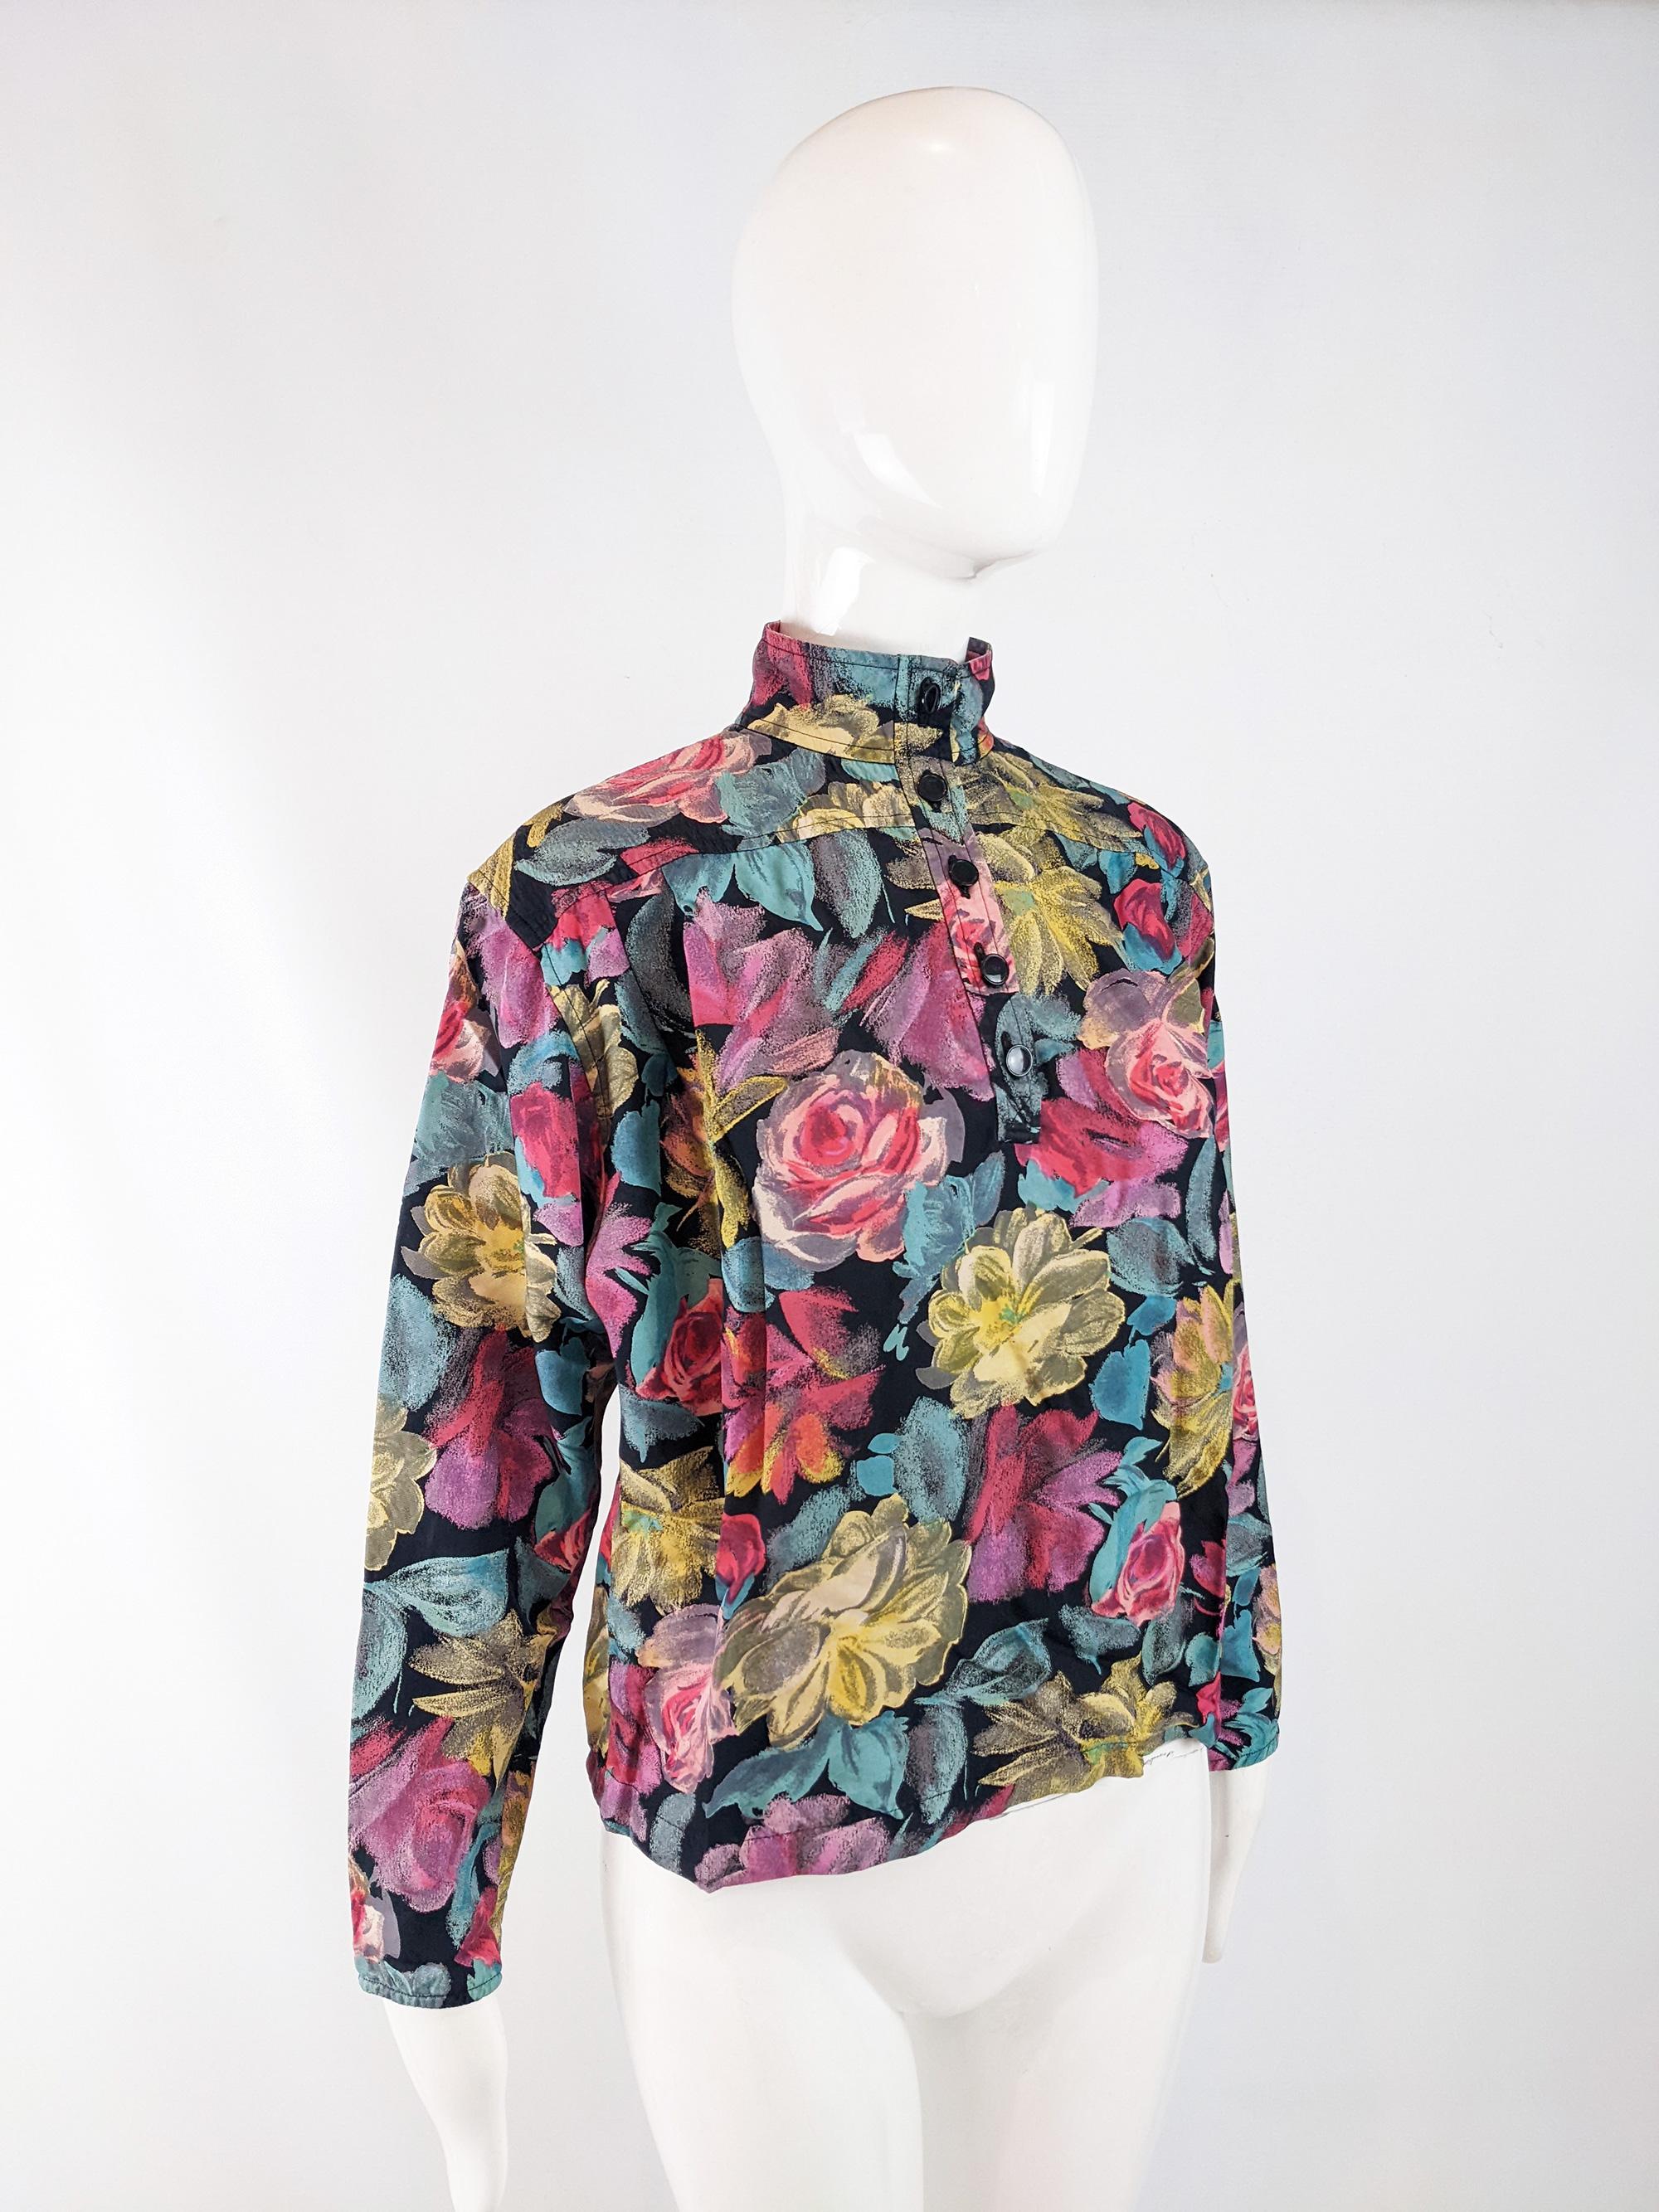 Gray Emanuel Ungaro Vintage 80s Bold Floral Print Long Sleeve Blouse Shirt, 1980s For Sale